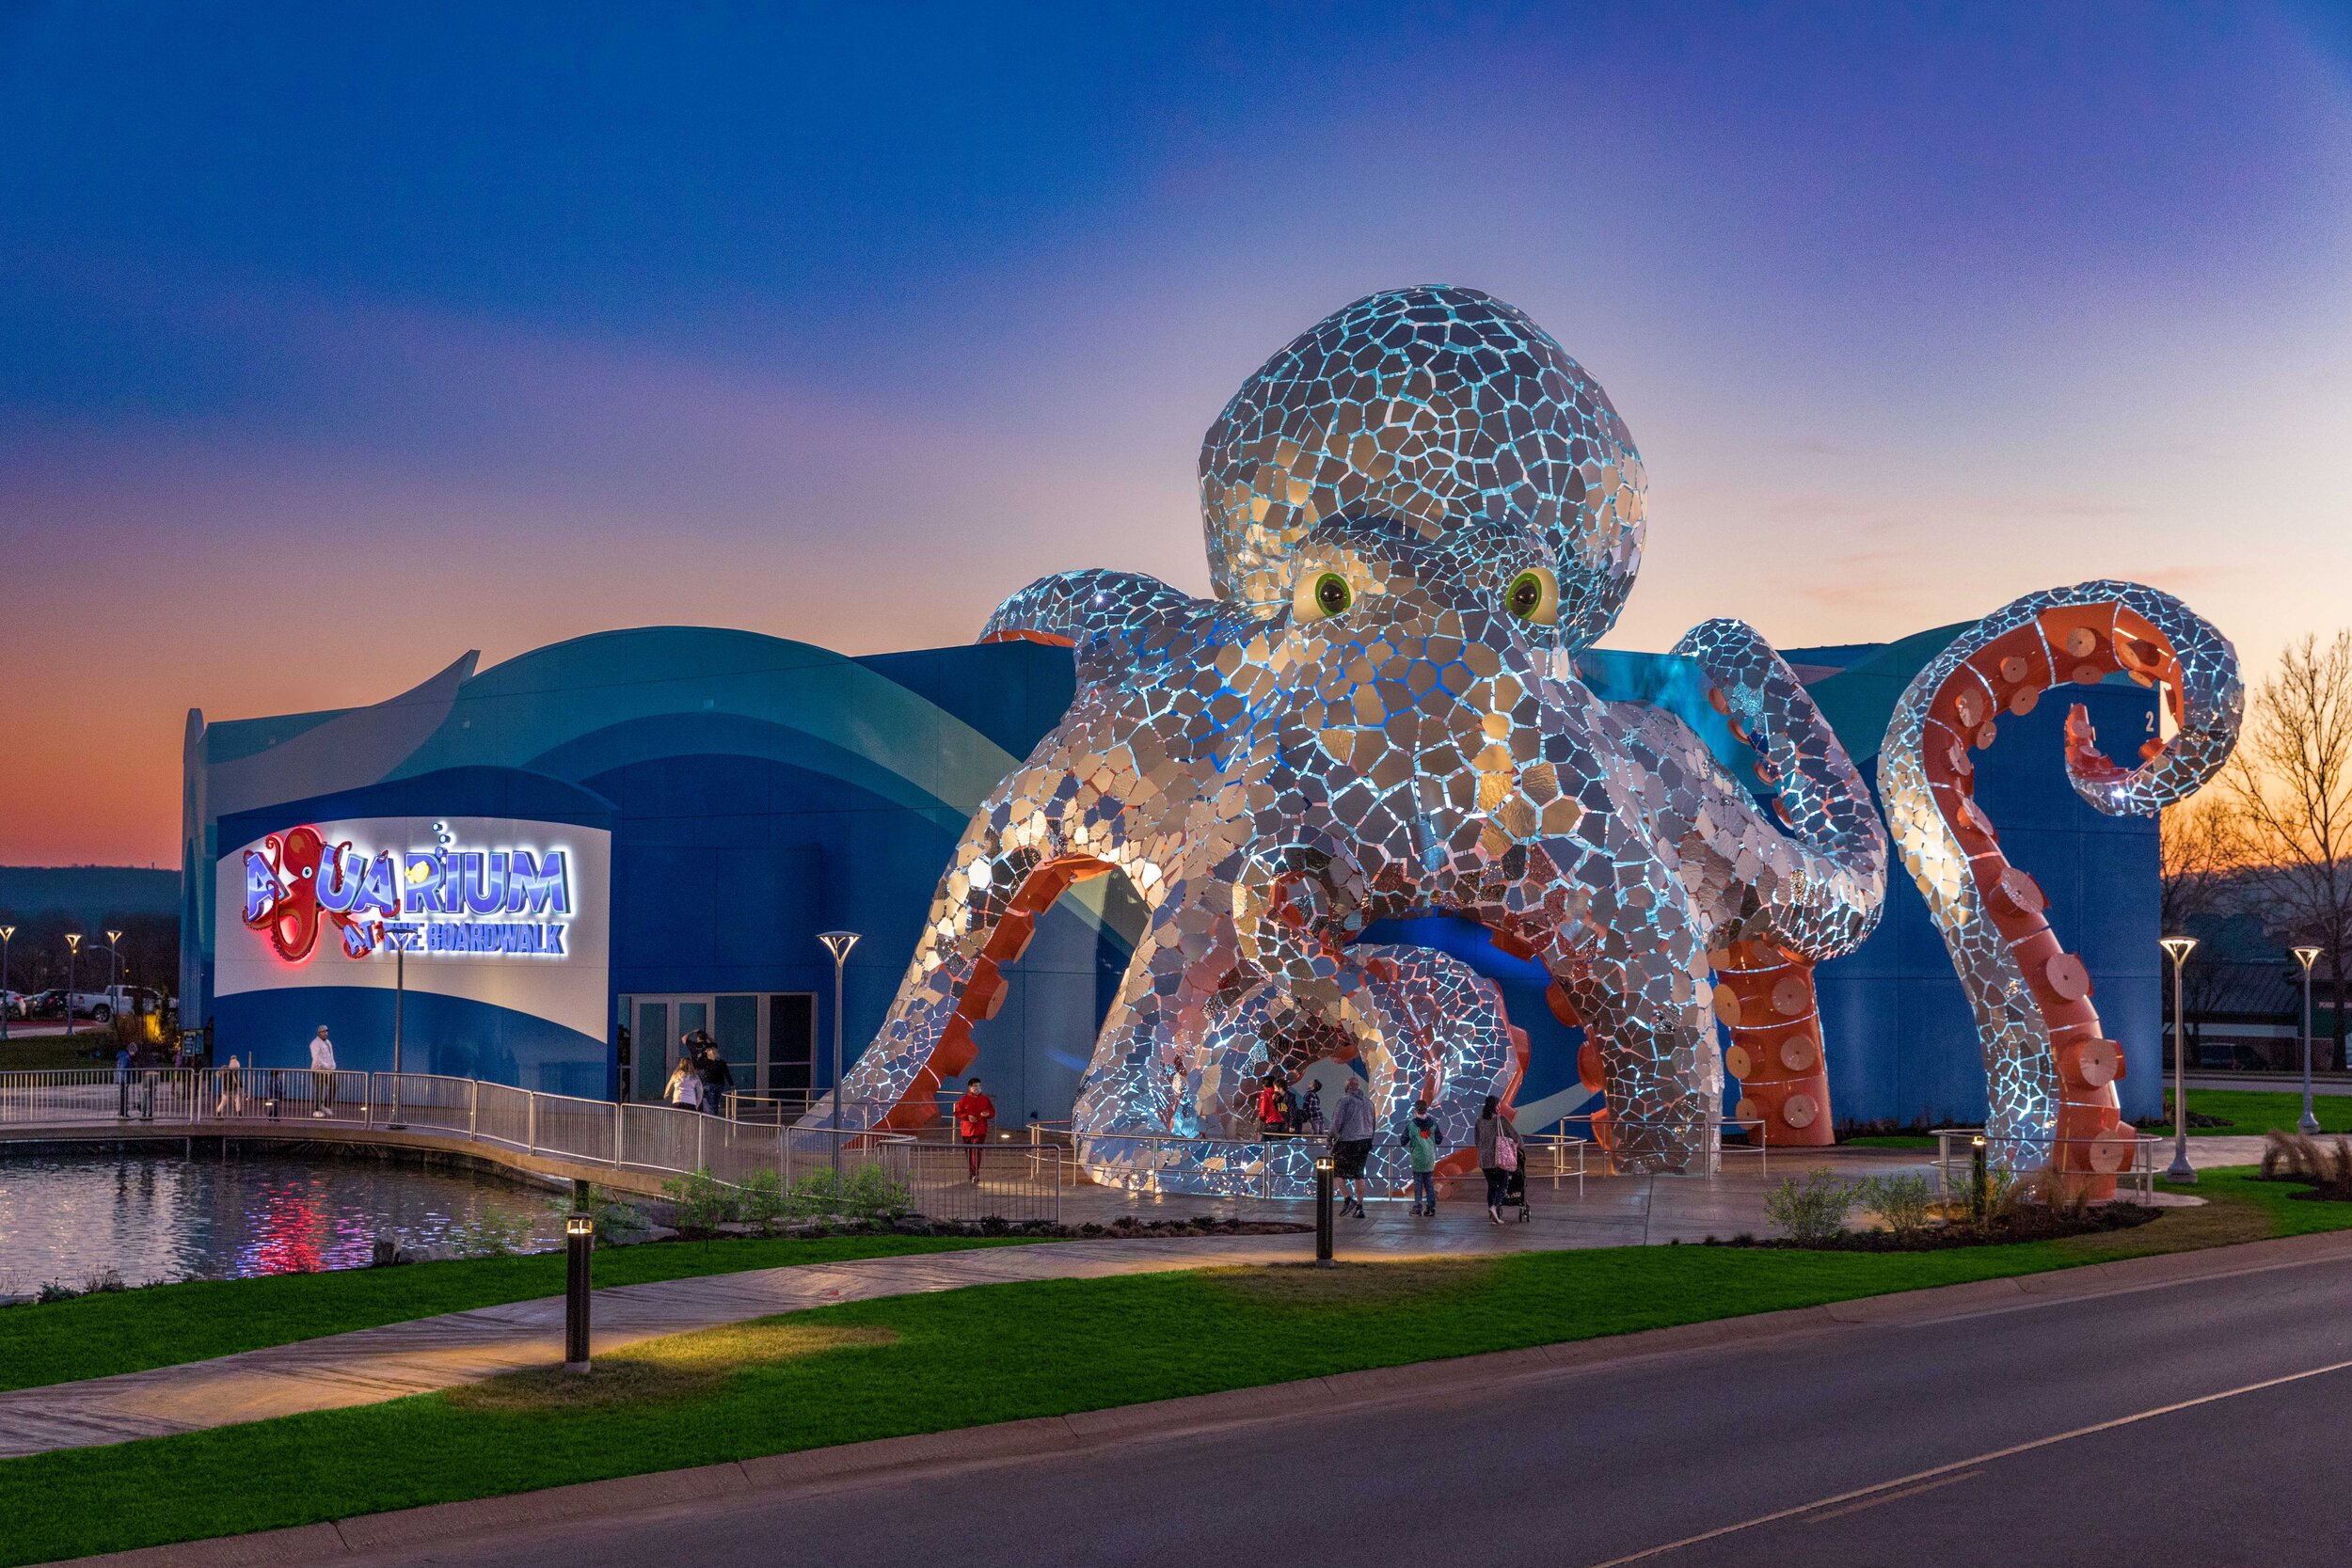 PHOTO_ATBB_Exterior-Octopus-Sculpture-Night-0122-Final.jpg